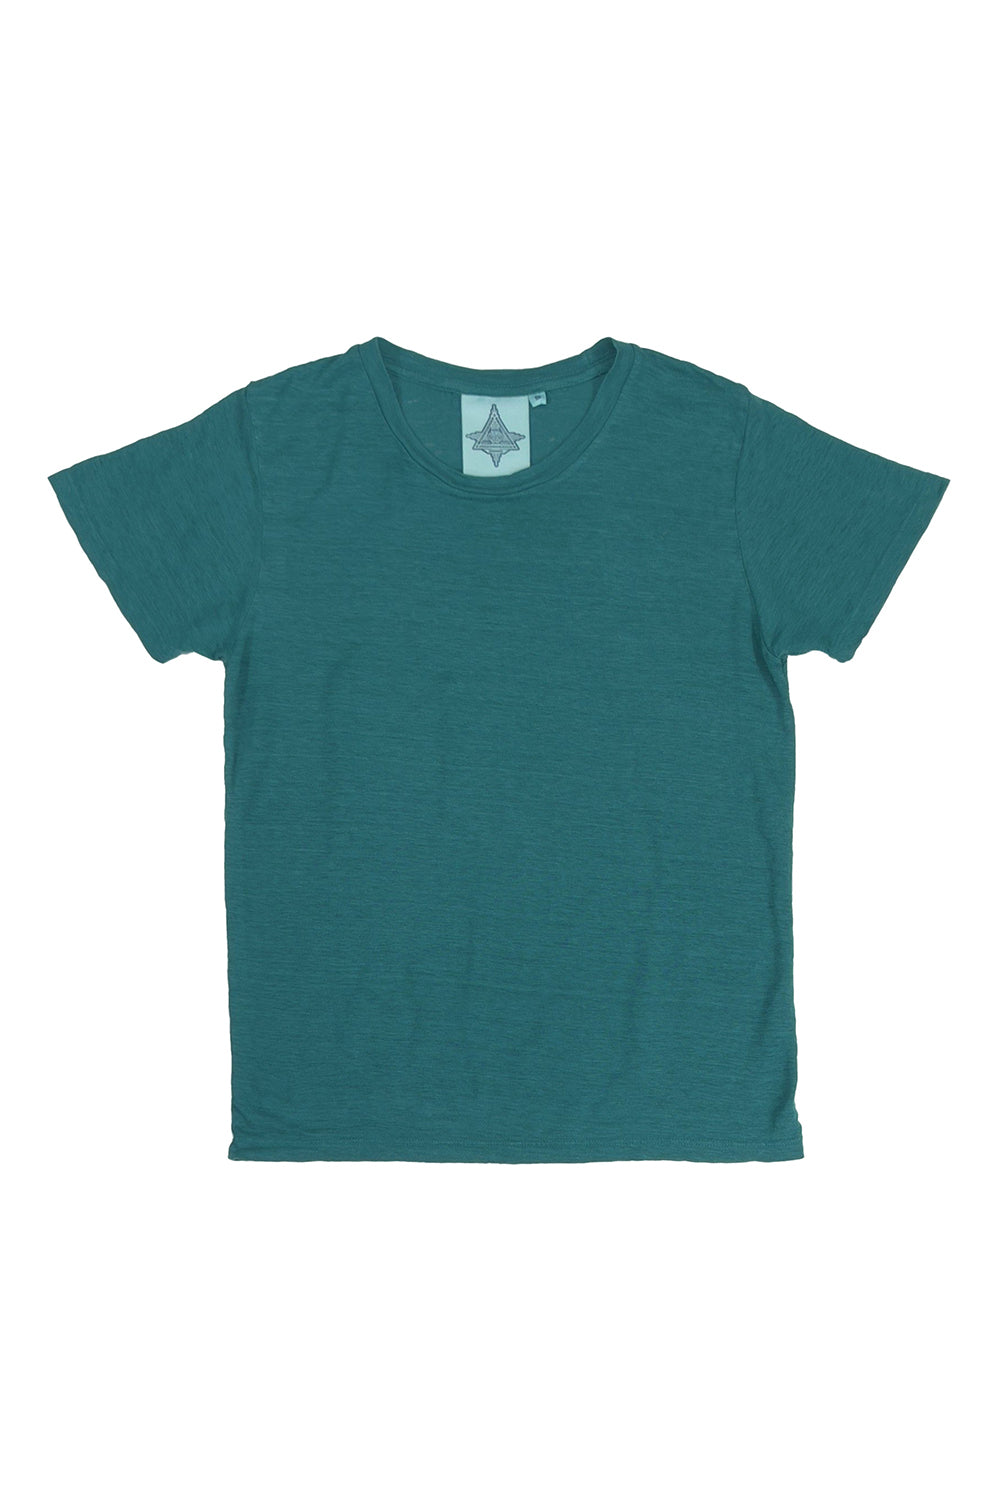 Madison 100% Hemp Tee | Jungmaven Hemp Clothing & Accessories / Color: Ivy Green